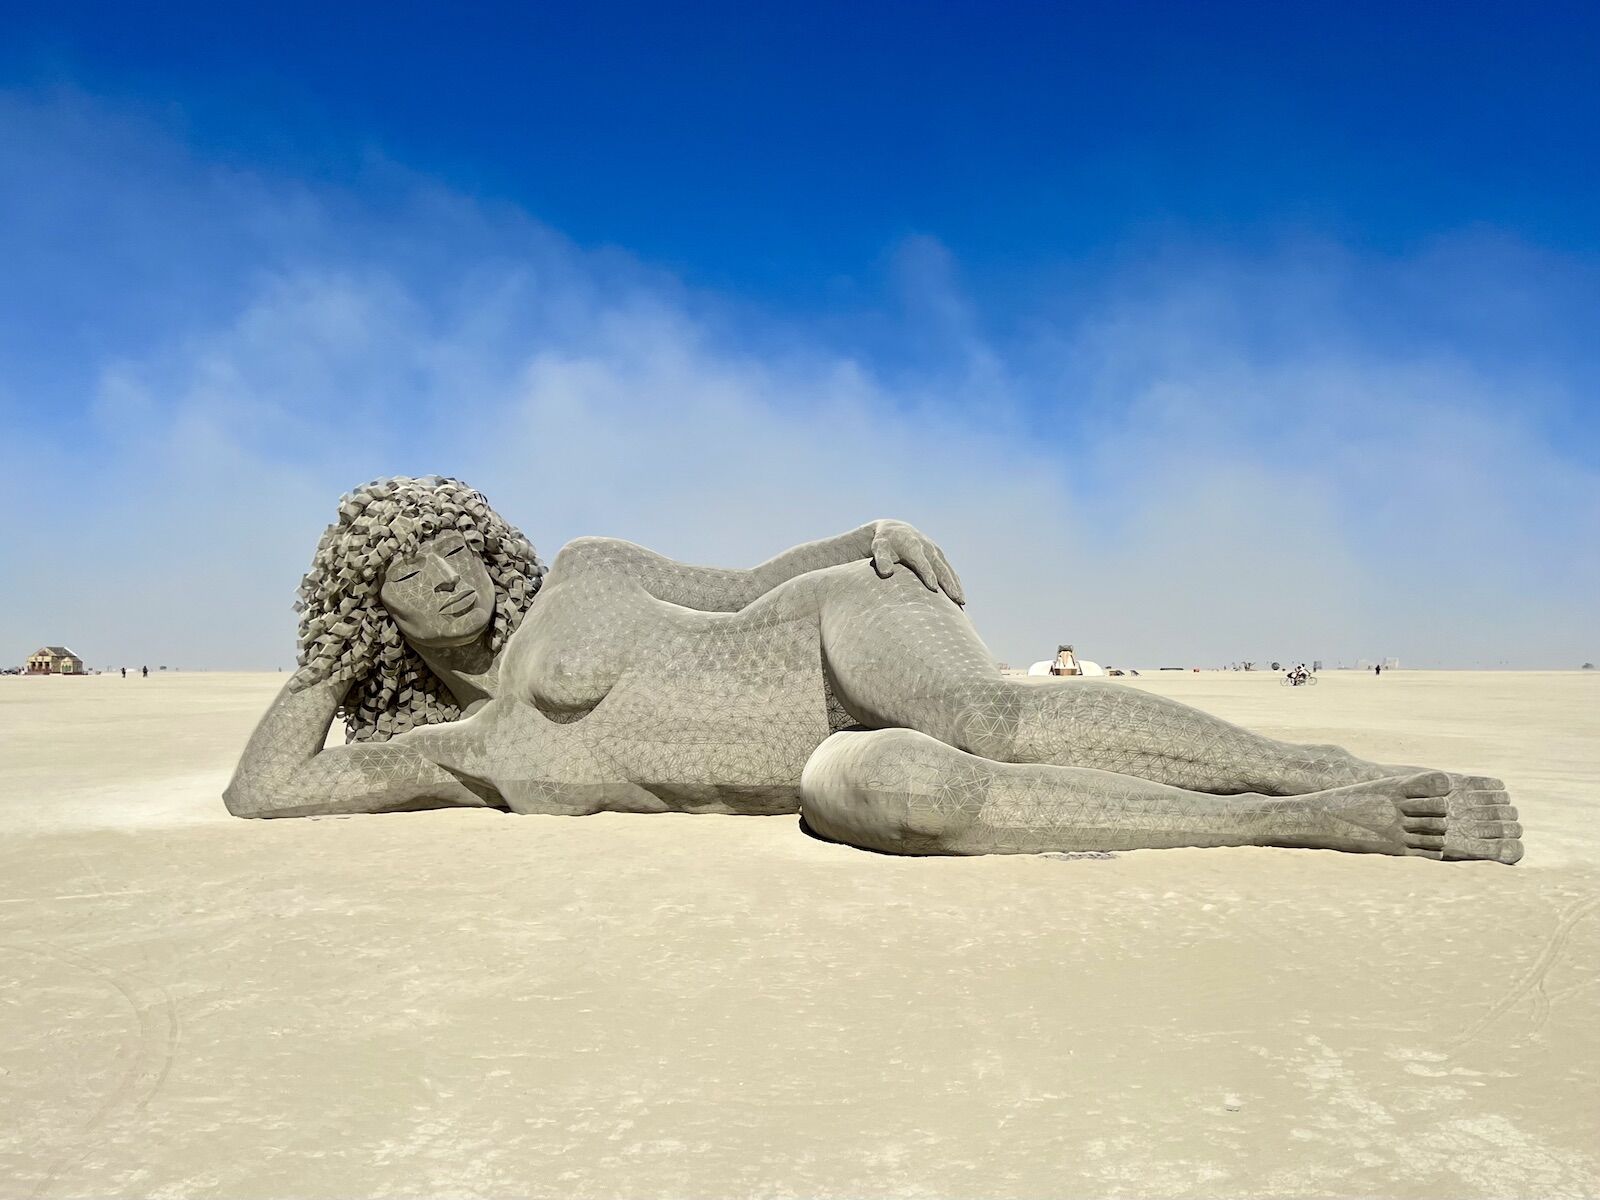 Art from Burning Man 2022: "Gaia" by artist Marco Cochrane